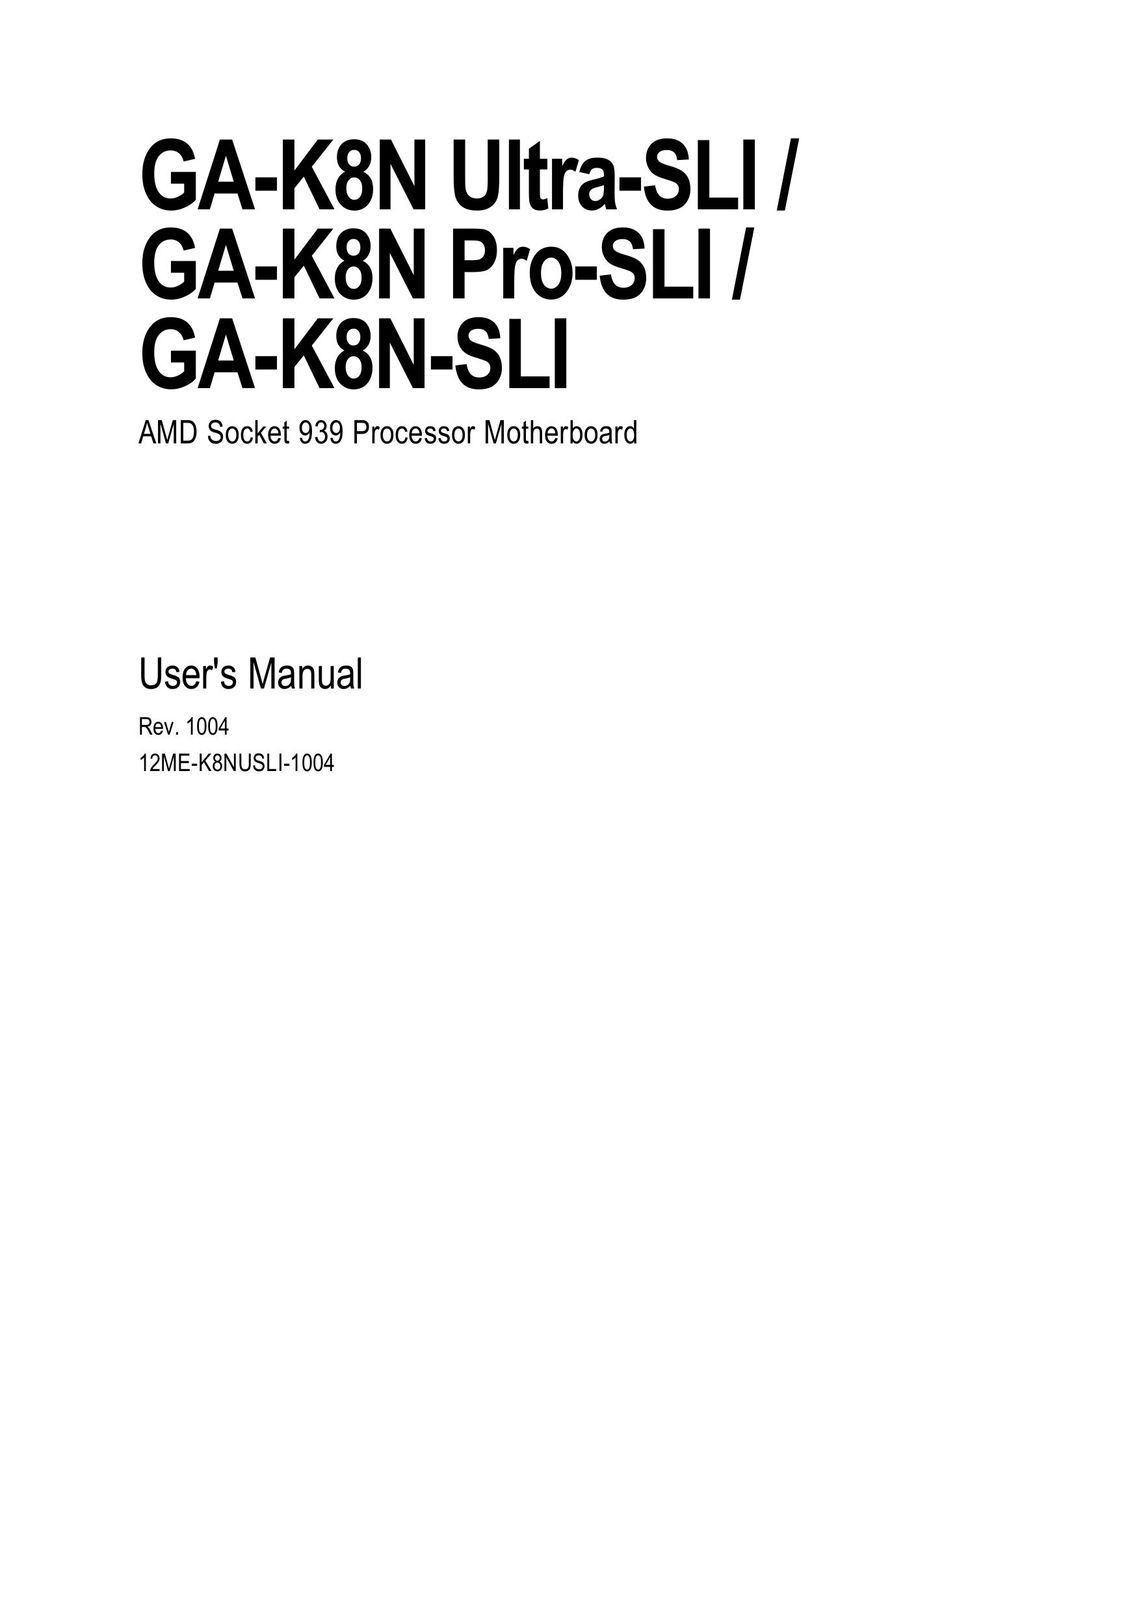 Gigabyte GA-K8NULTRA-SLI Computer Hardware User Manual